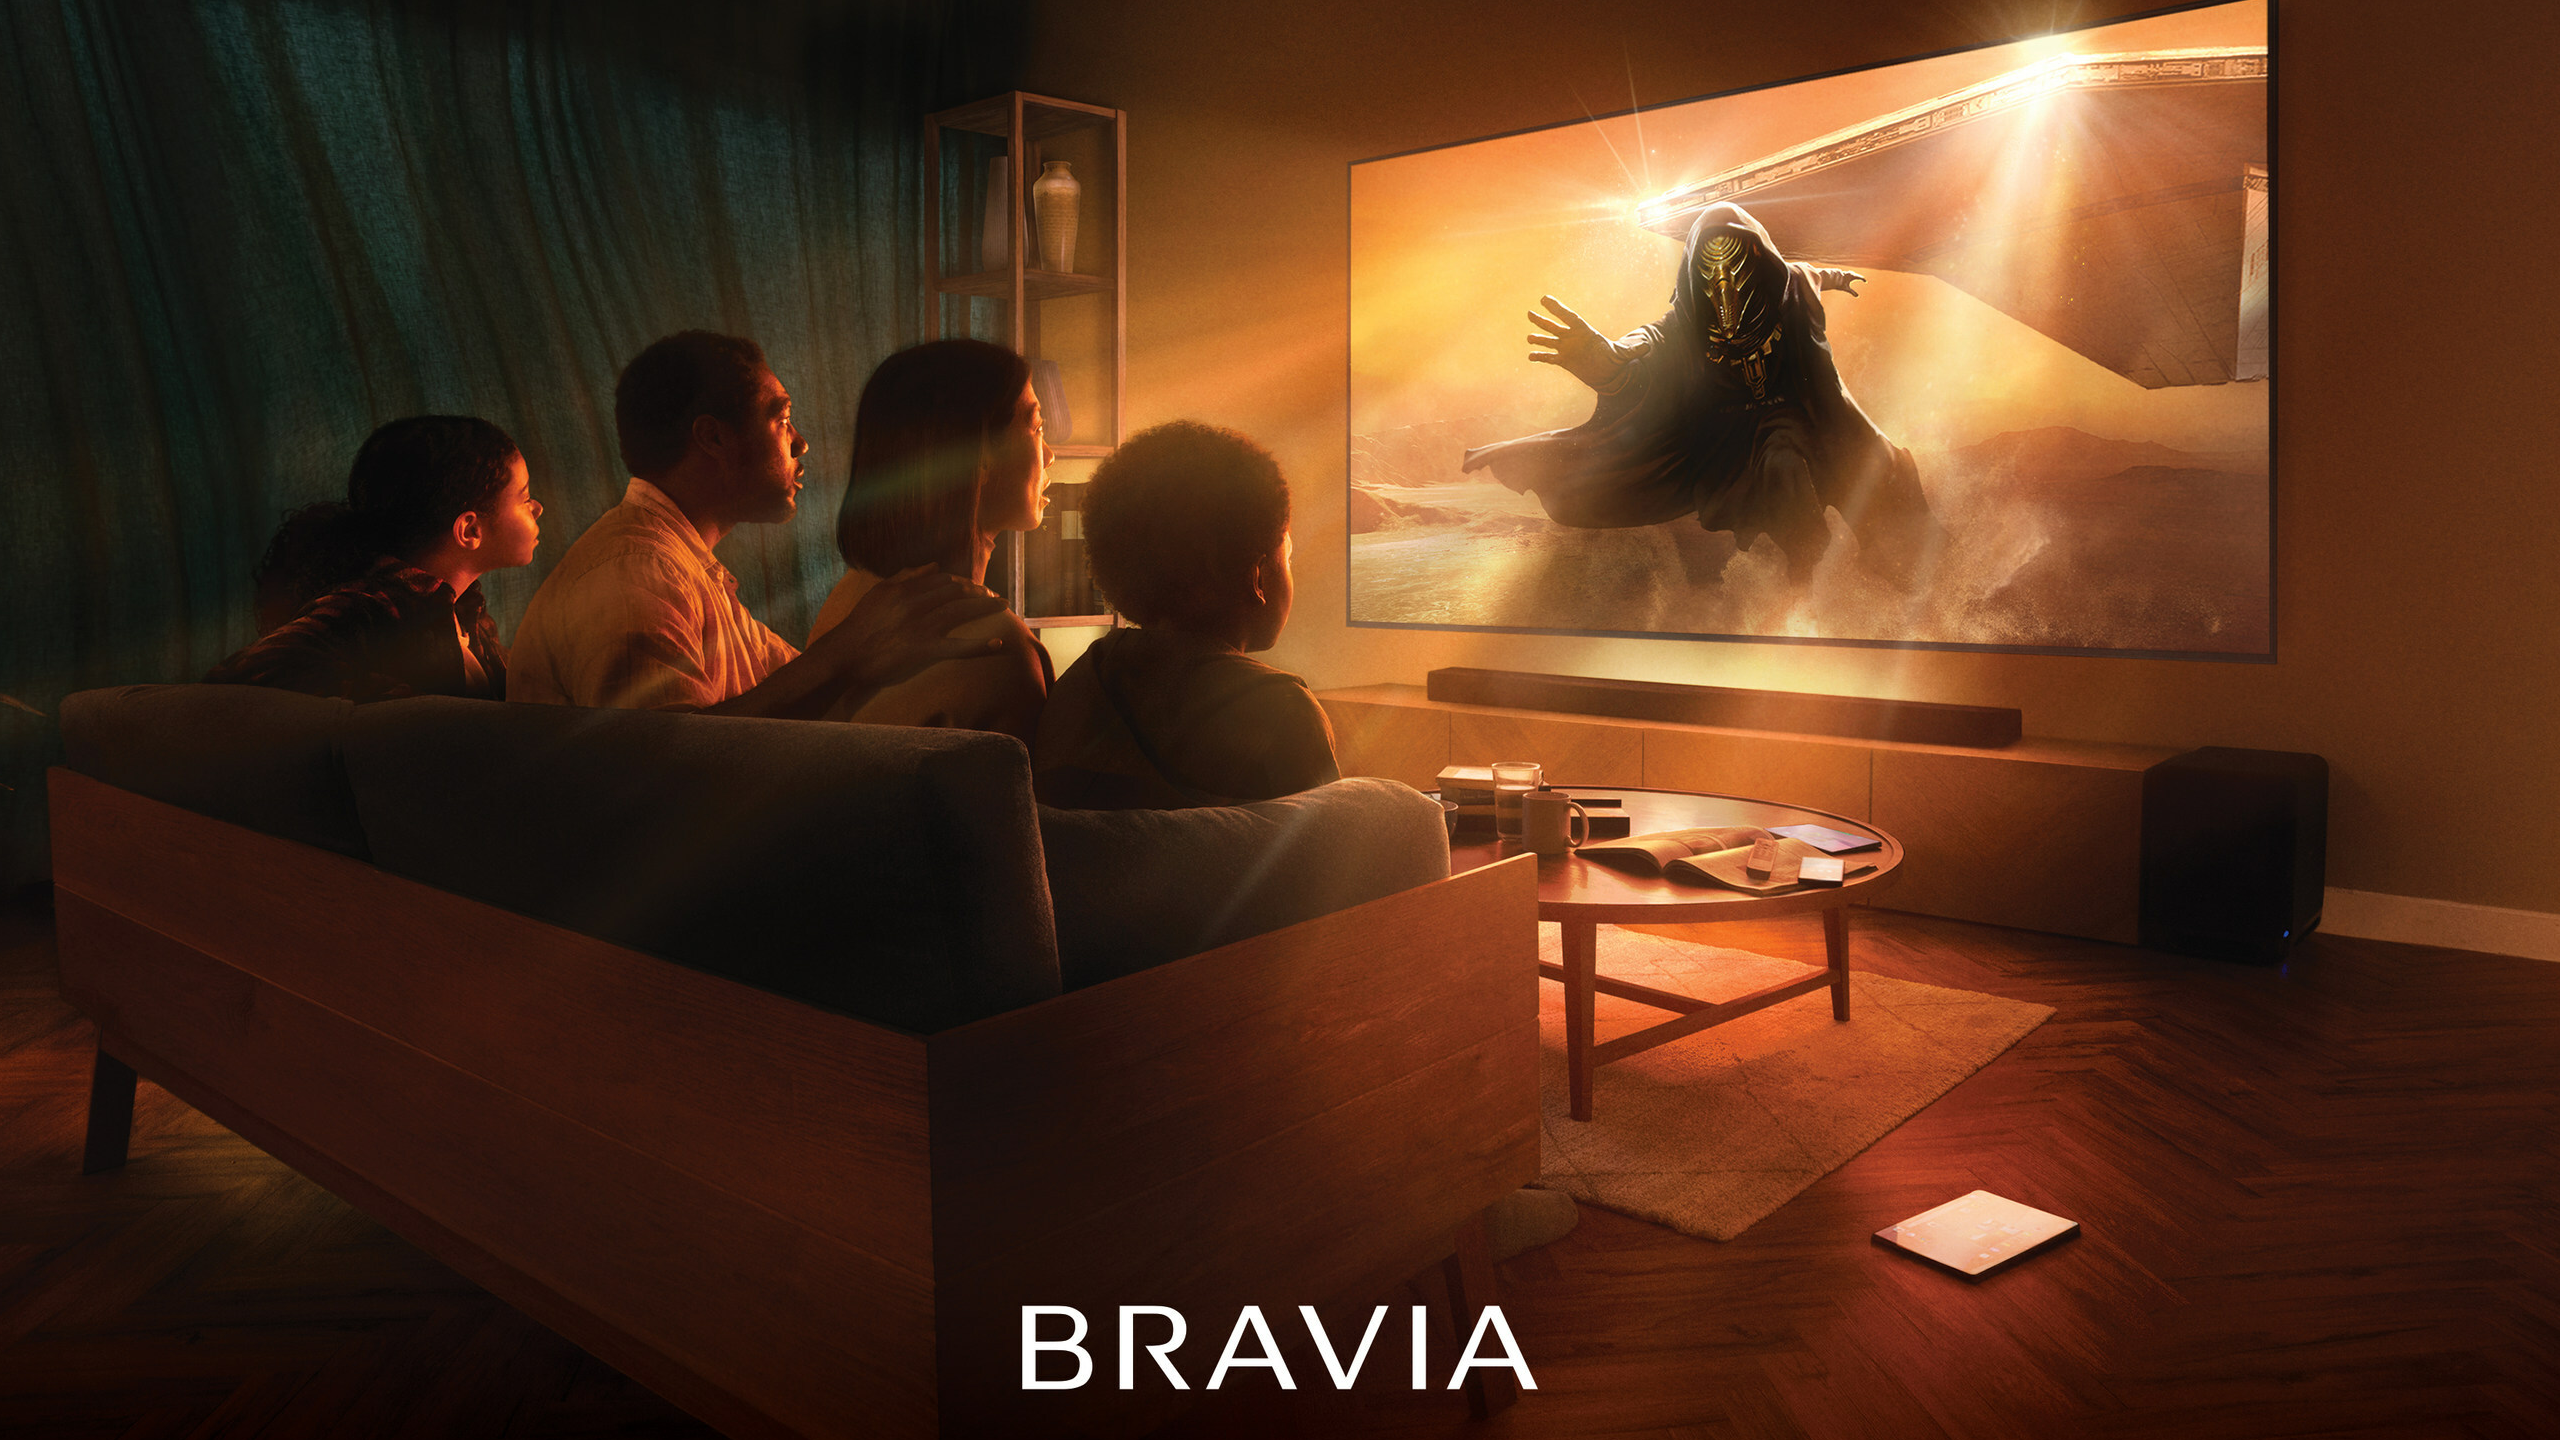 Sony Bravia 'cinema is coming home' slogan